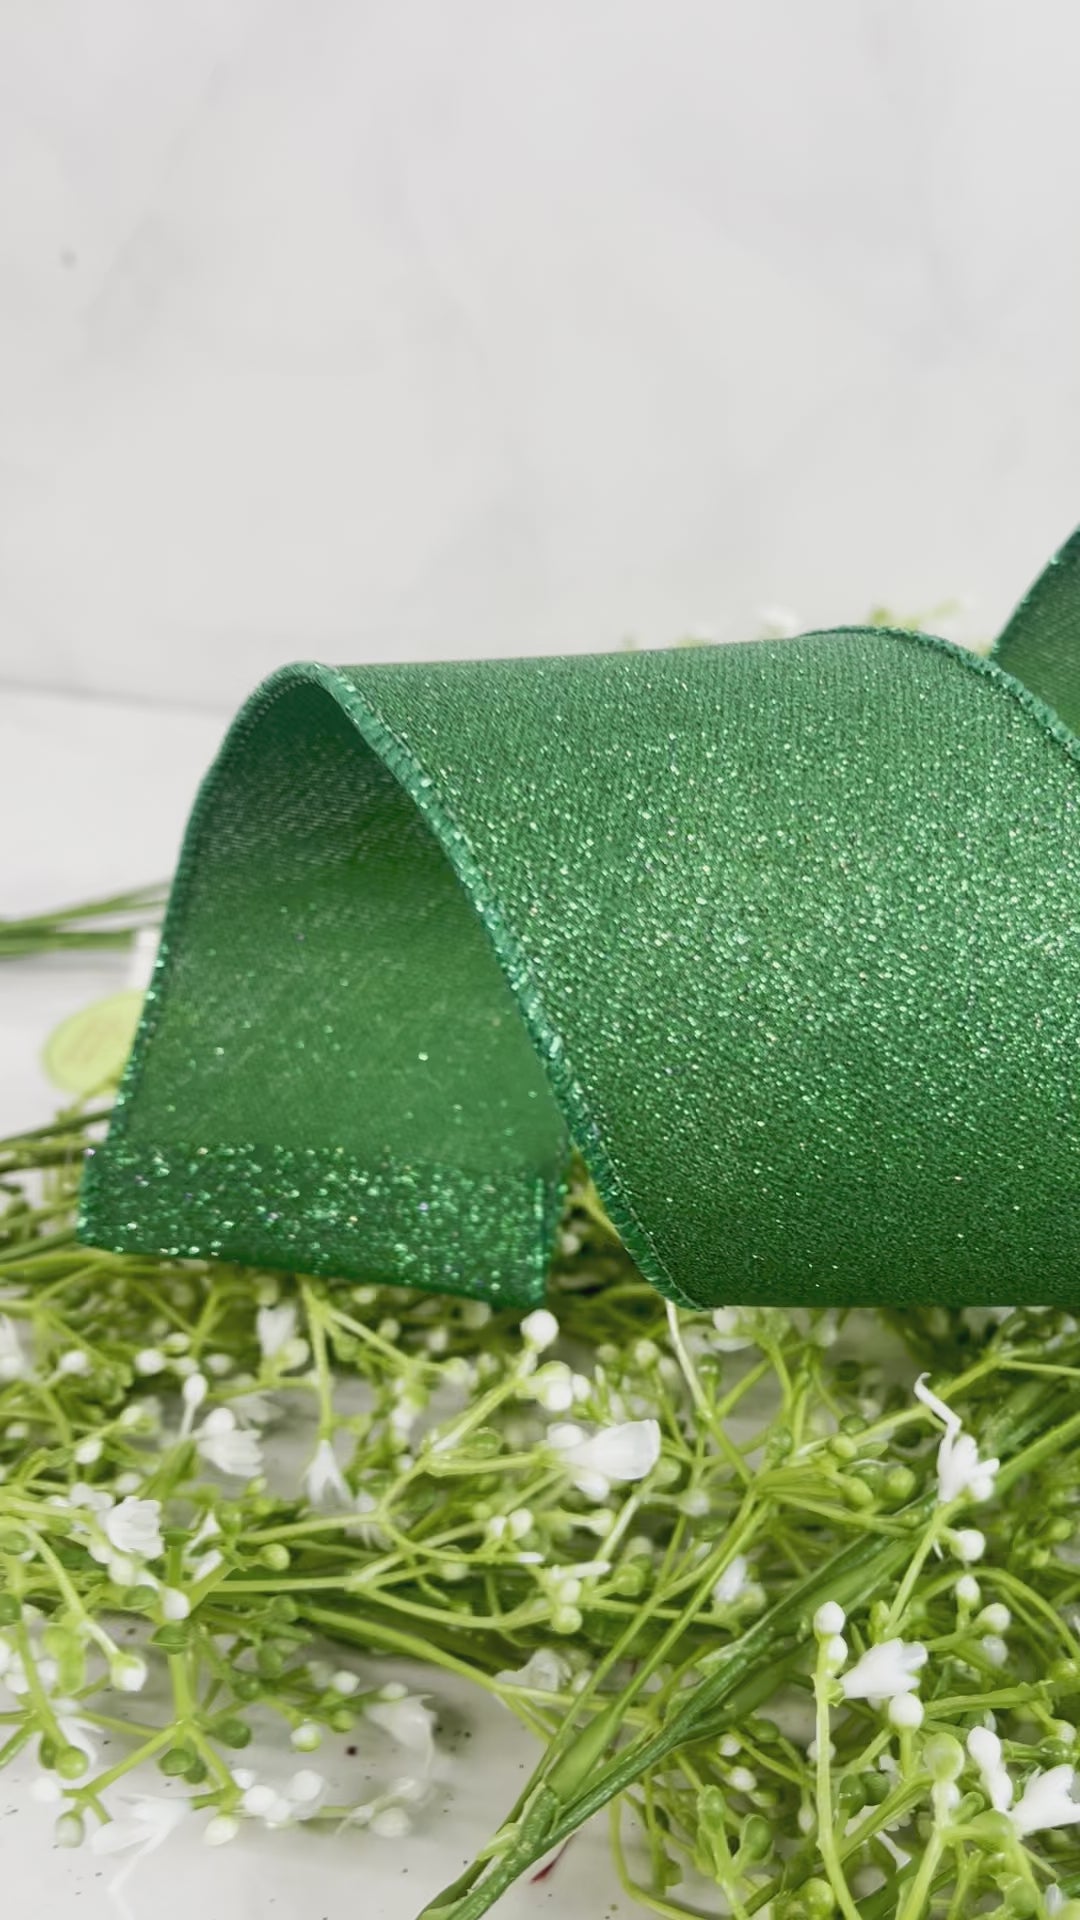 2.5 Emerald Green Glitter Ribbon - Wired Christmas Ribbon - 10 Yards